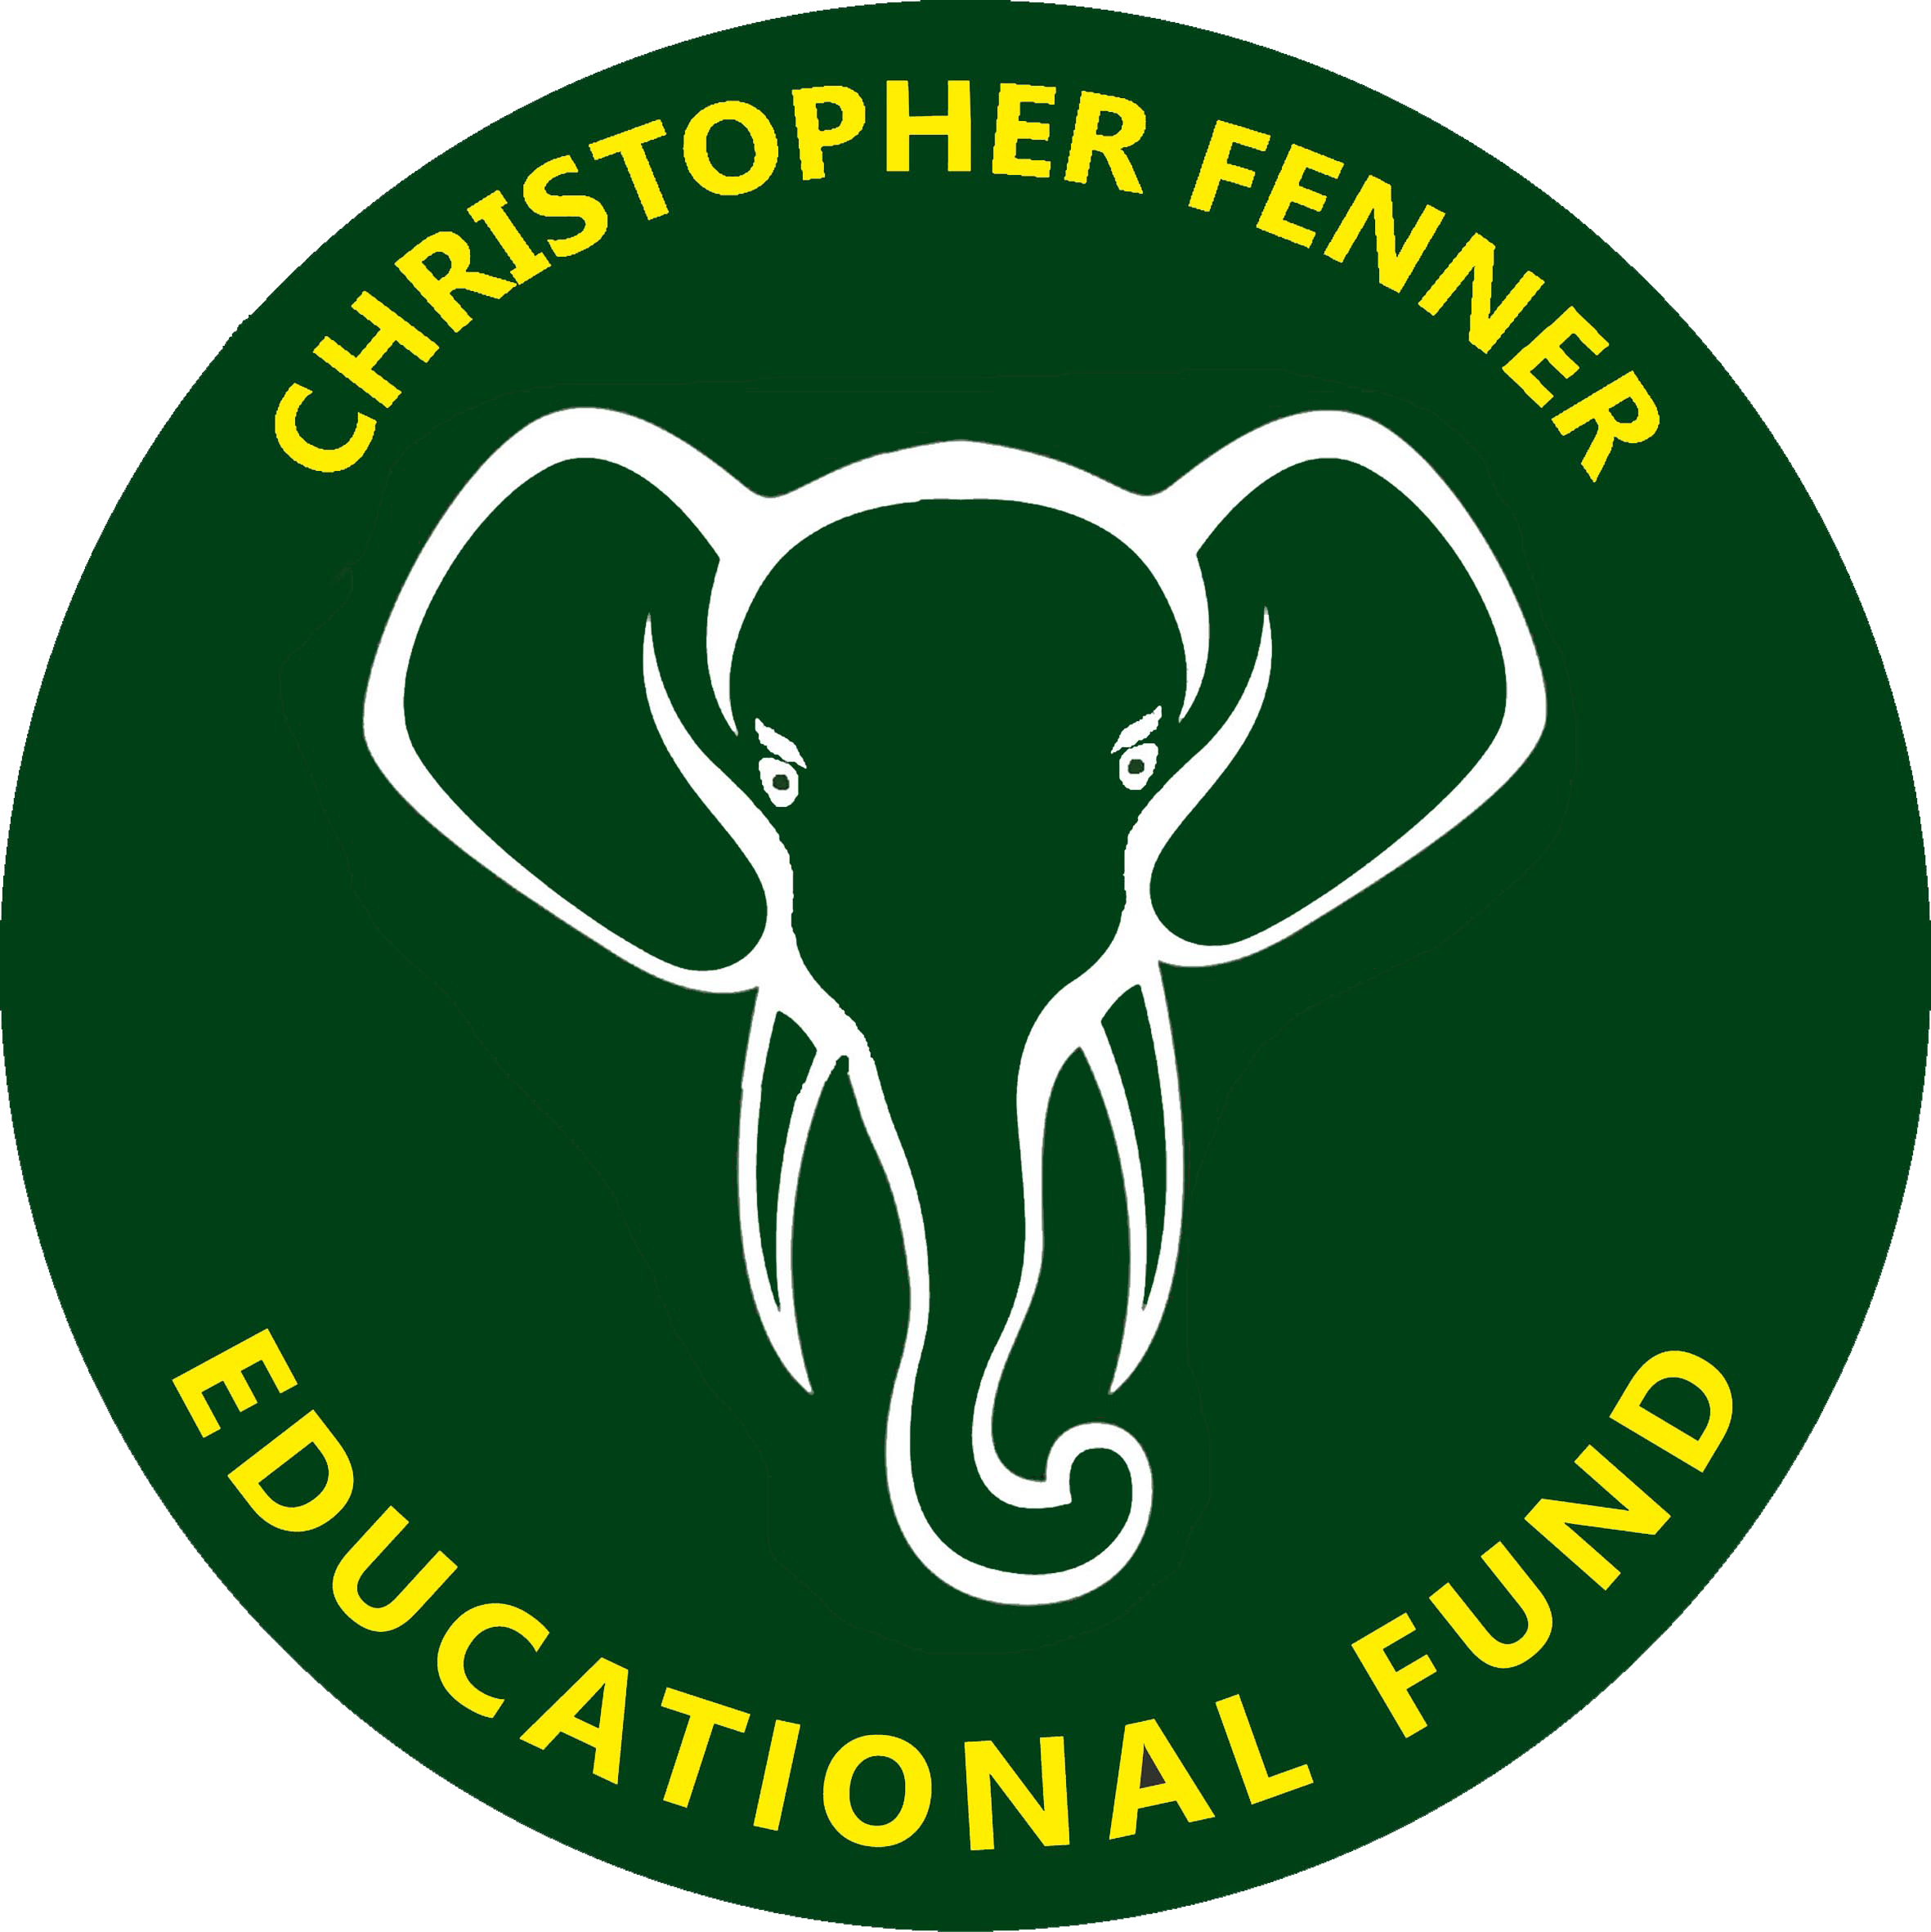 Chris Fenner Fund - Conservation through Education